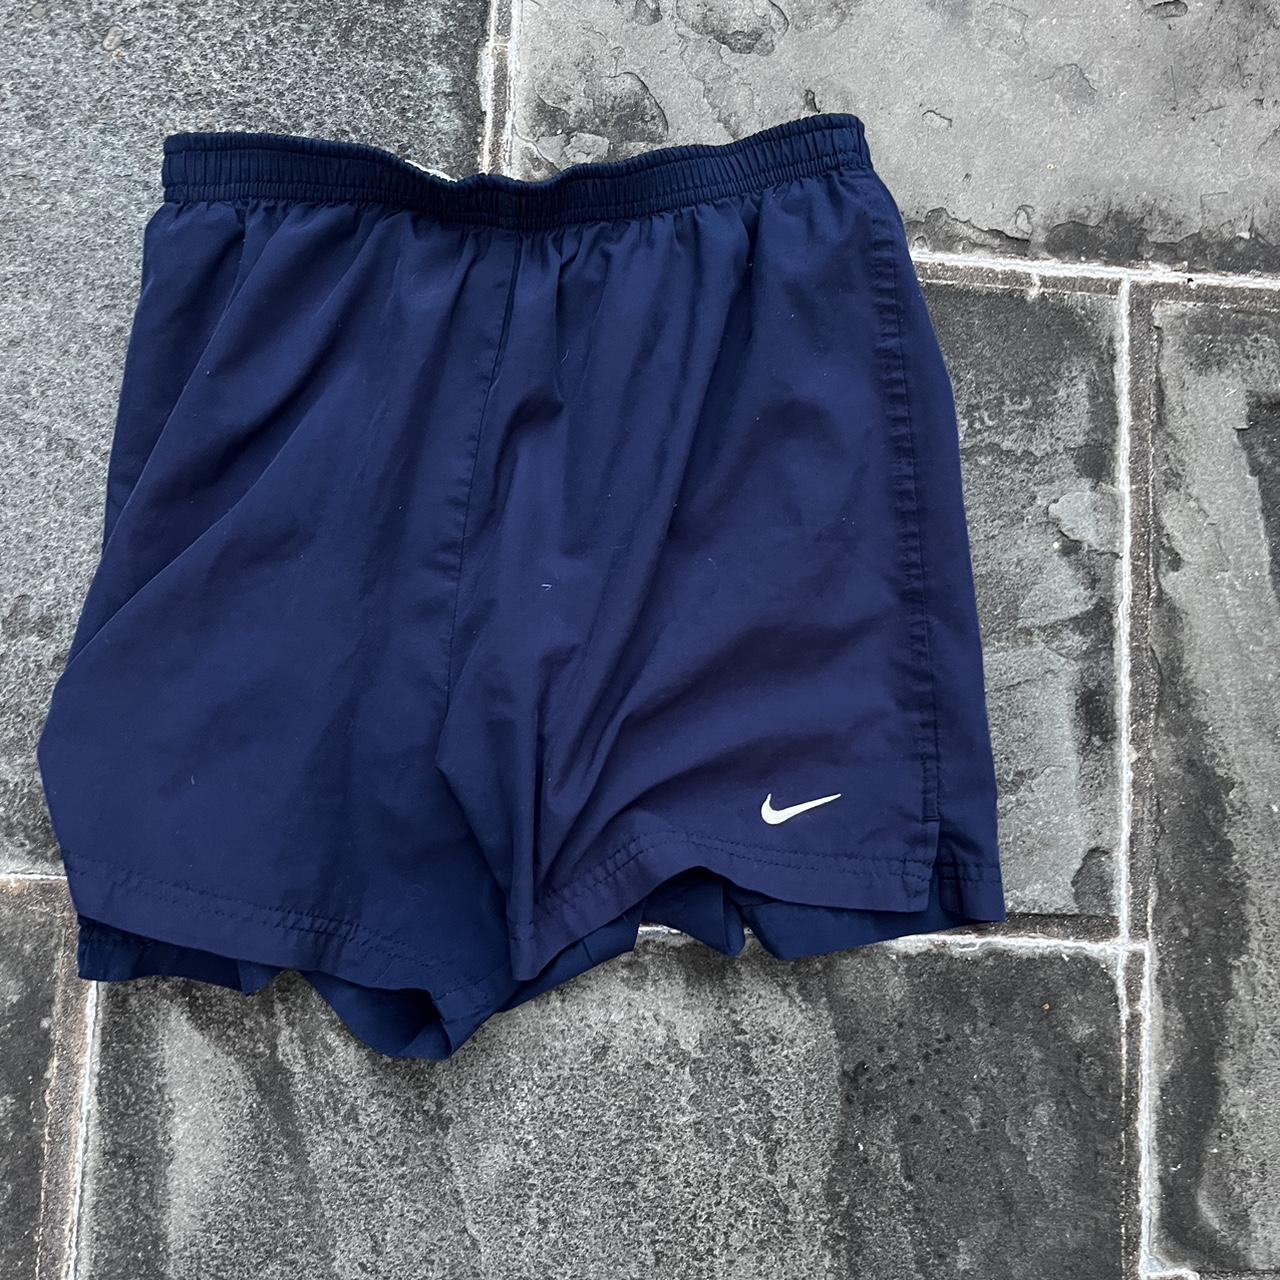 Vintage Nike solo swoosh shorts in navy blue 5 inch... - Depop